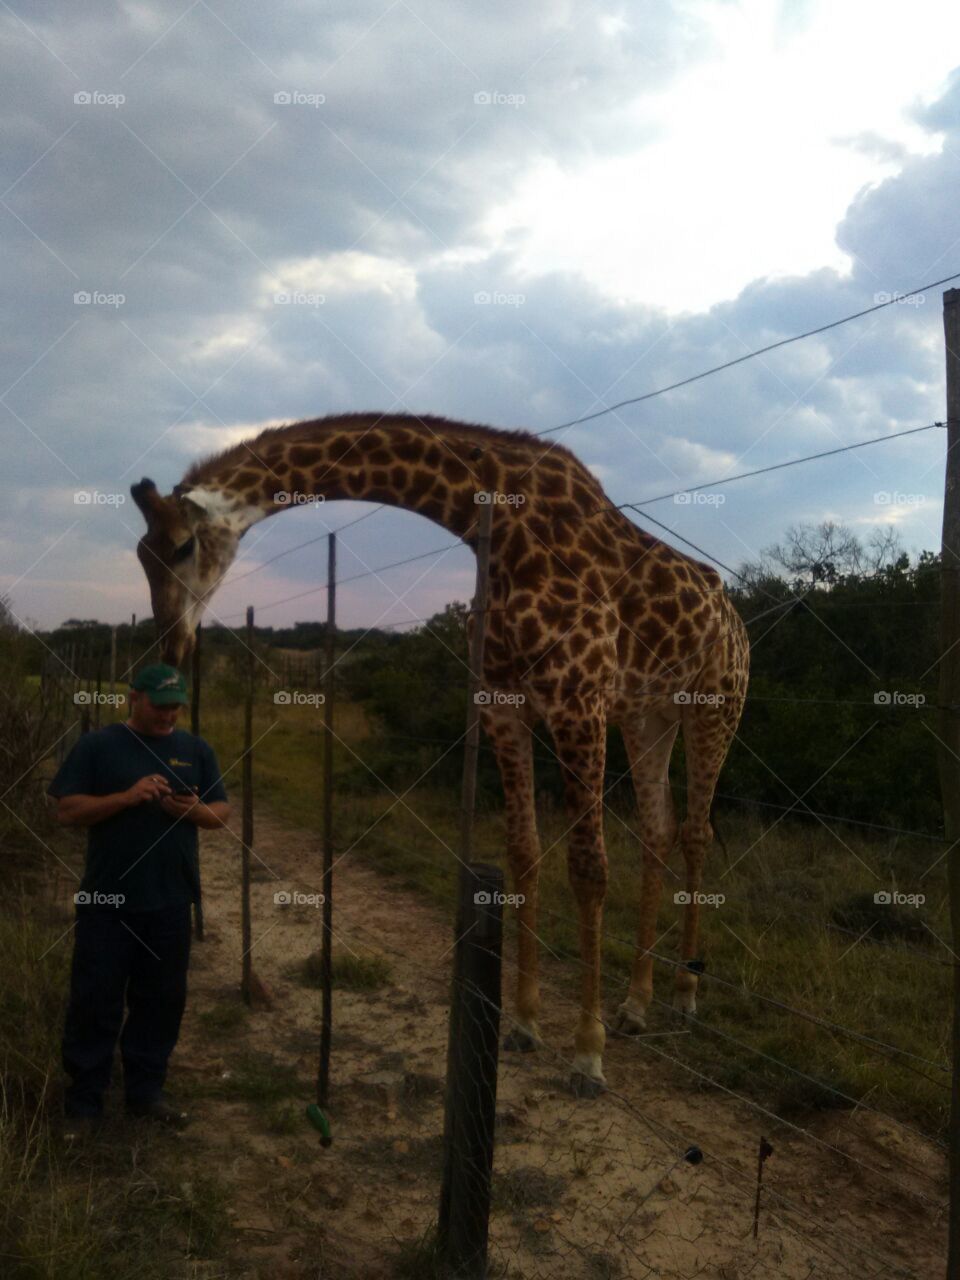 Tame Giraffe